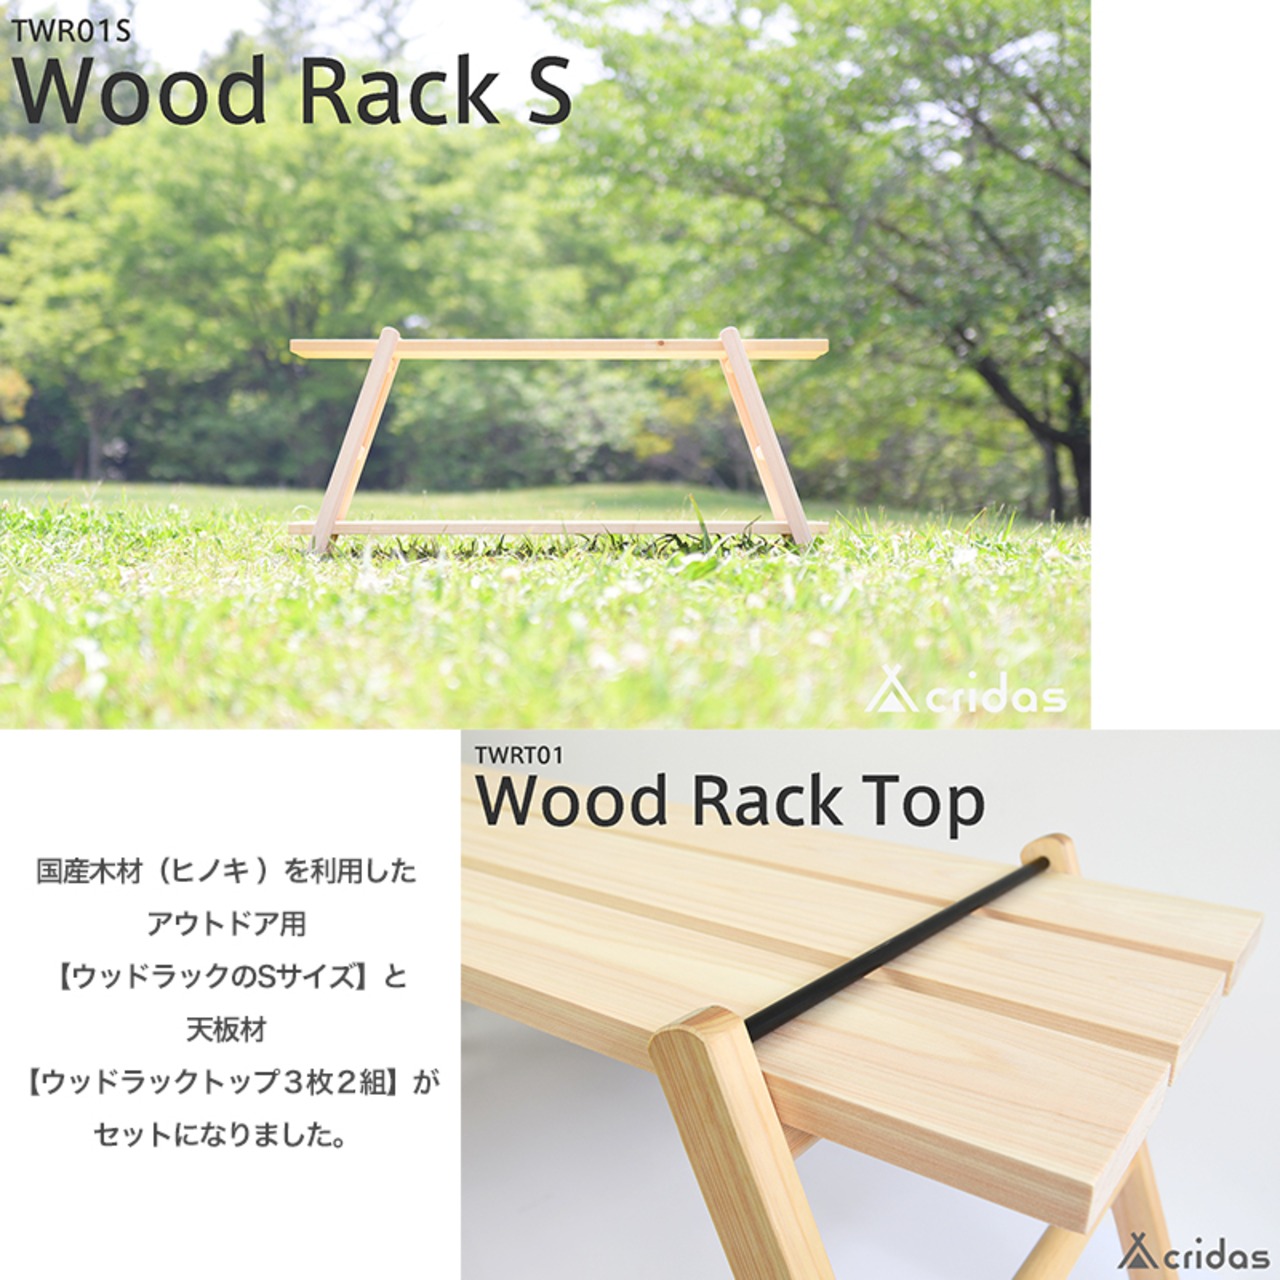 Cridas(クリダス) Wood Rack S ＆ Top2 Set アウトドア用 ウッドラックS